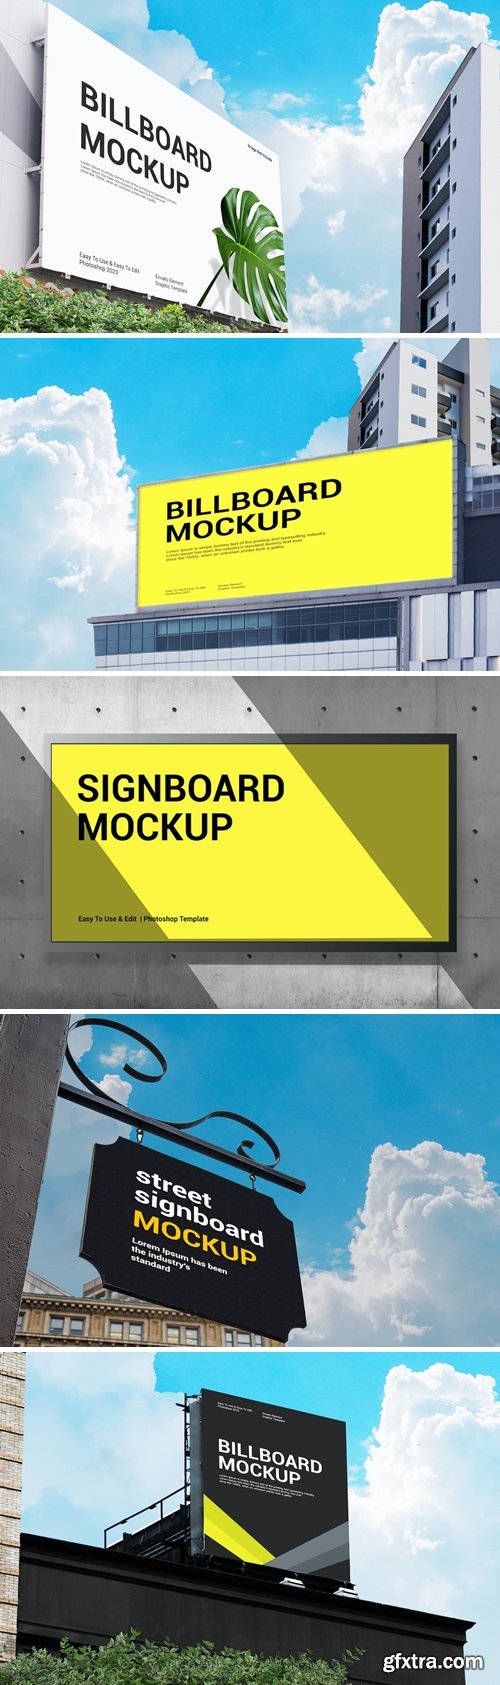 Billboard and Sign Mockup